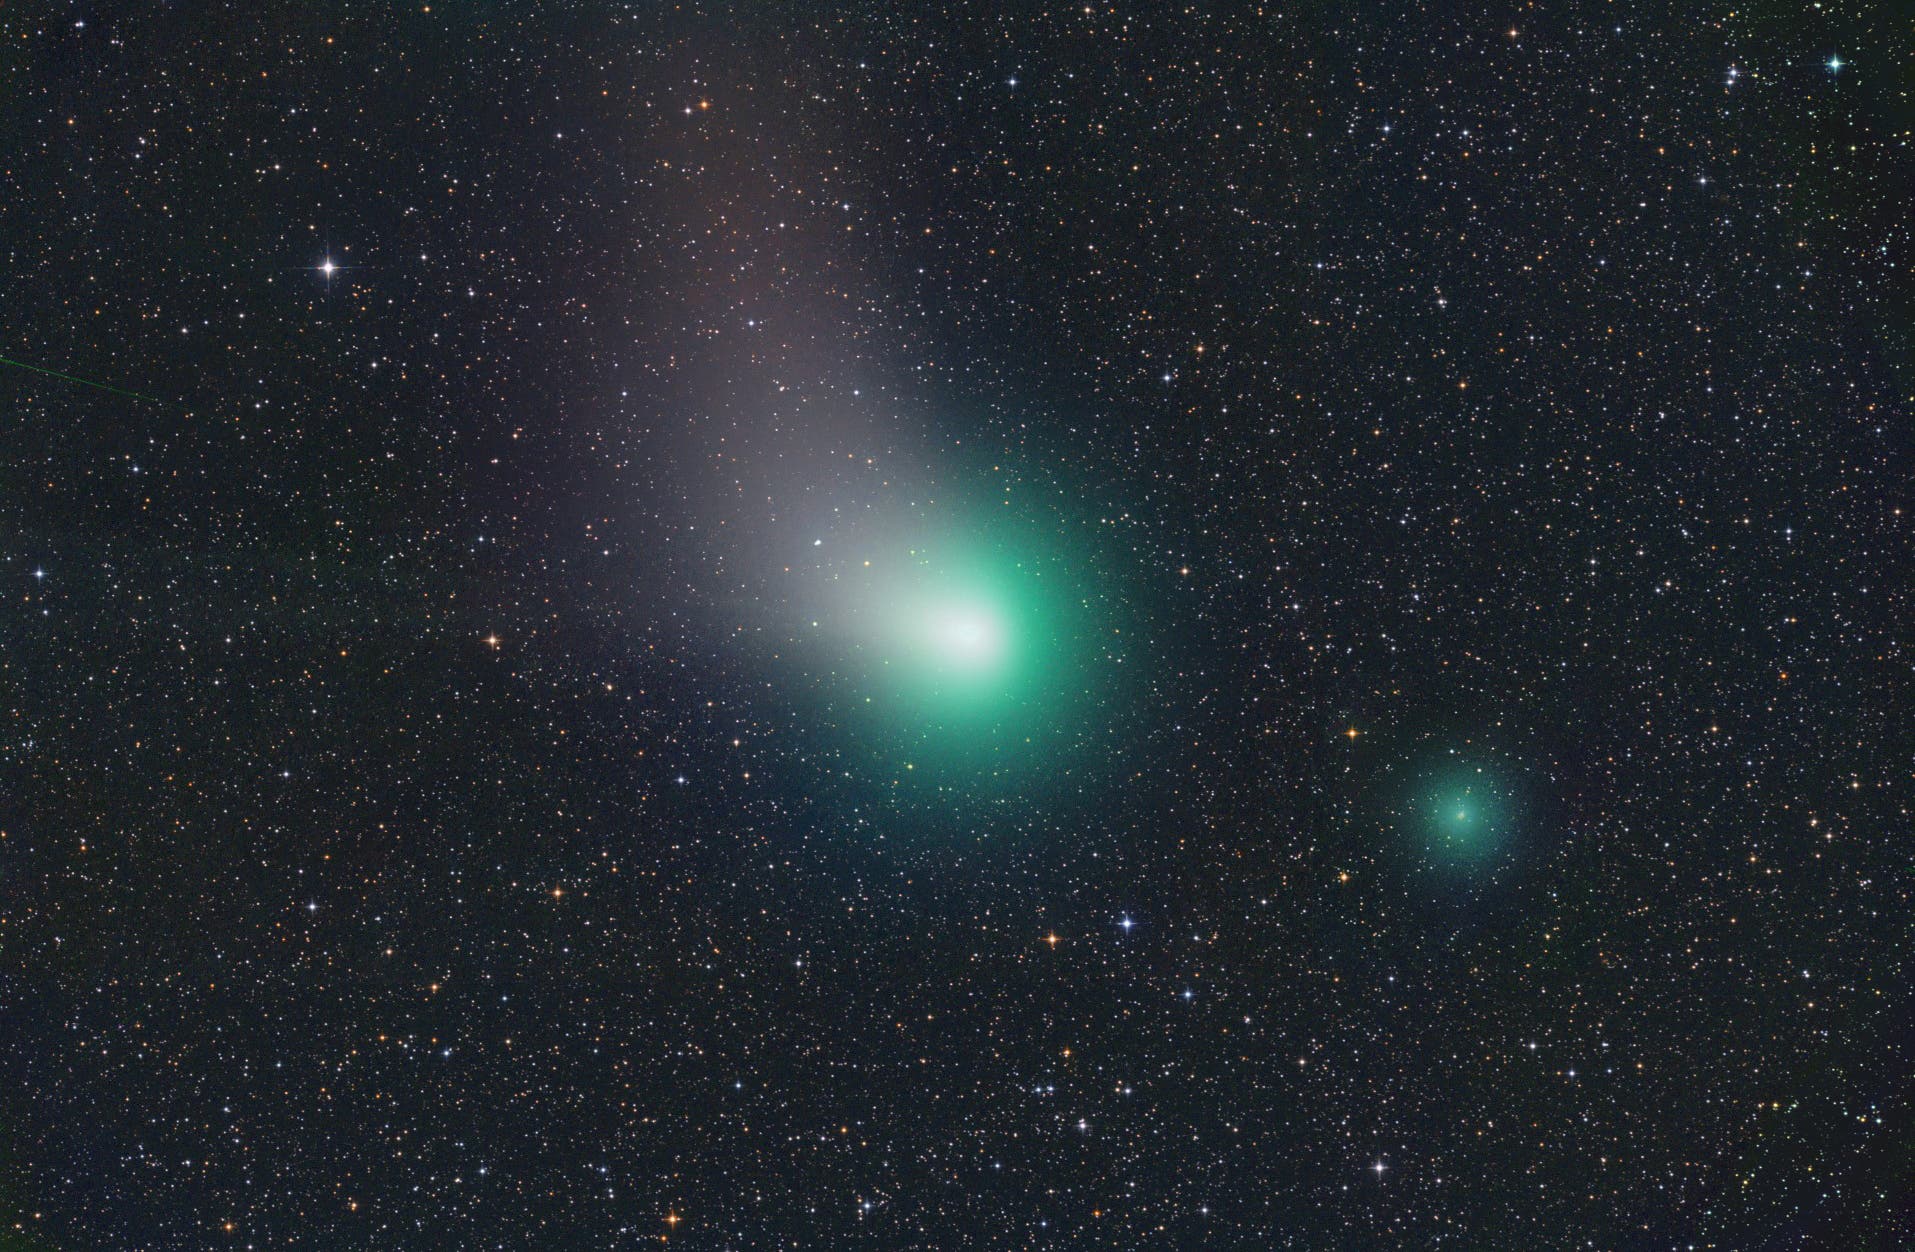 Zwei grüne Kometen